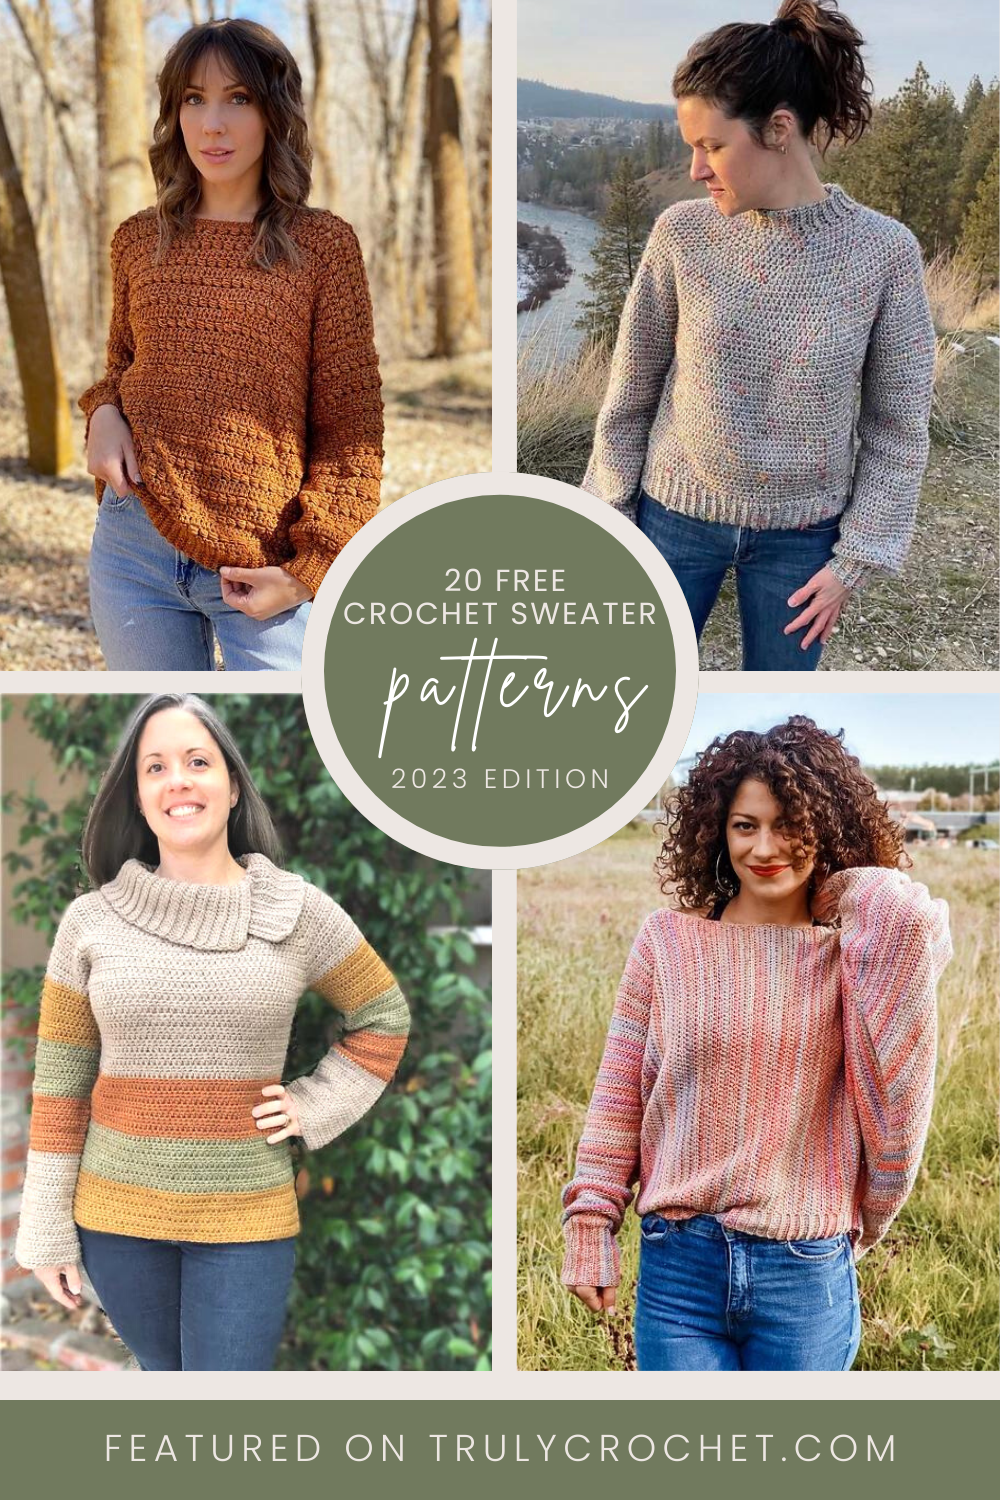 15 Stylish Free Crochet Top Patterns - Hooked On Patterns